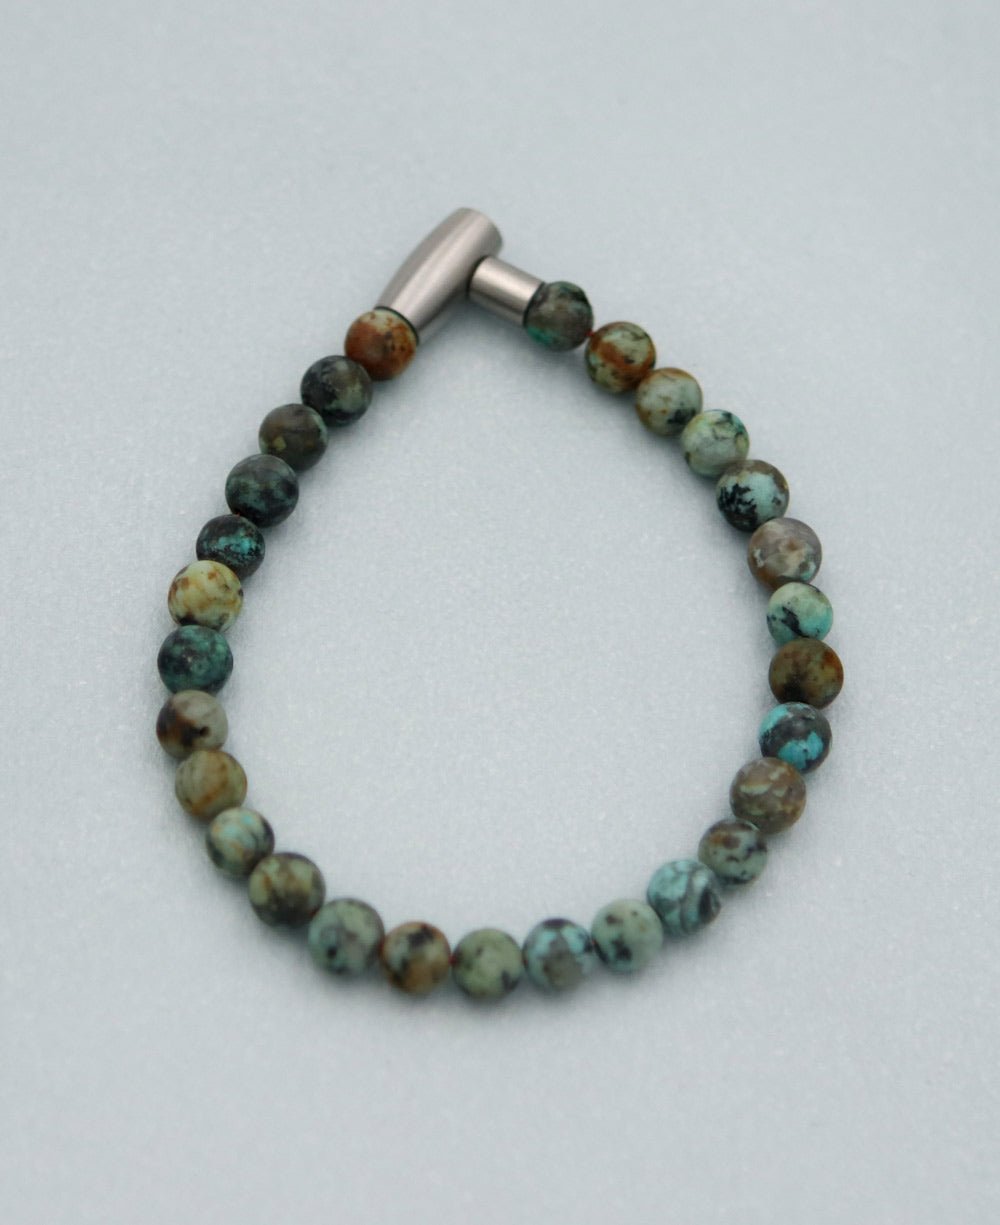 Inspirational Gemstone Bracelets for Men - Turquoise